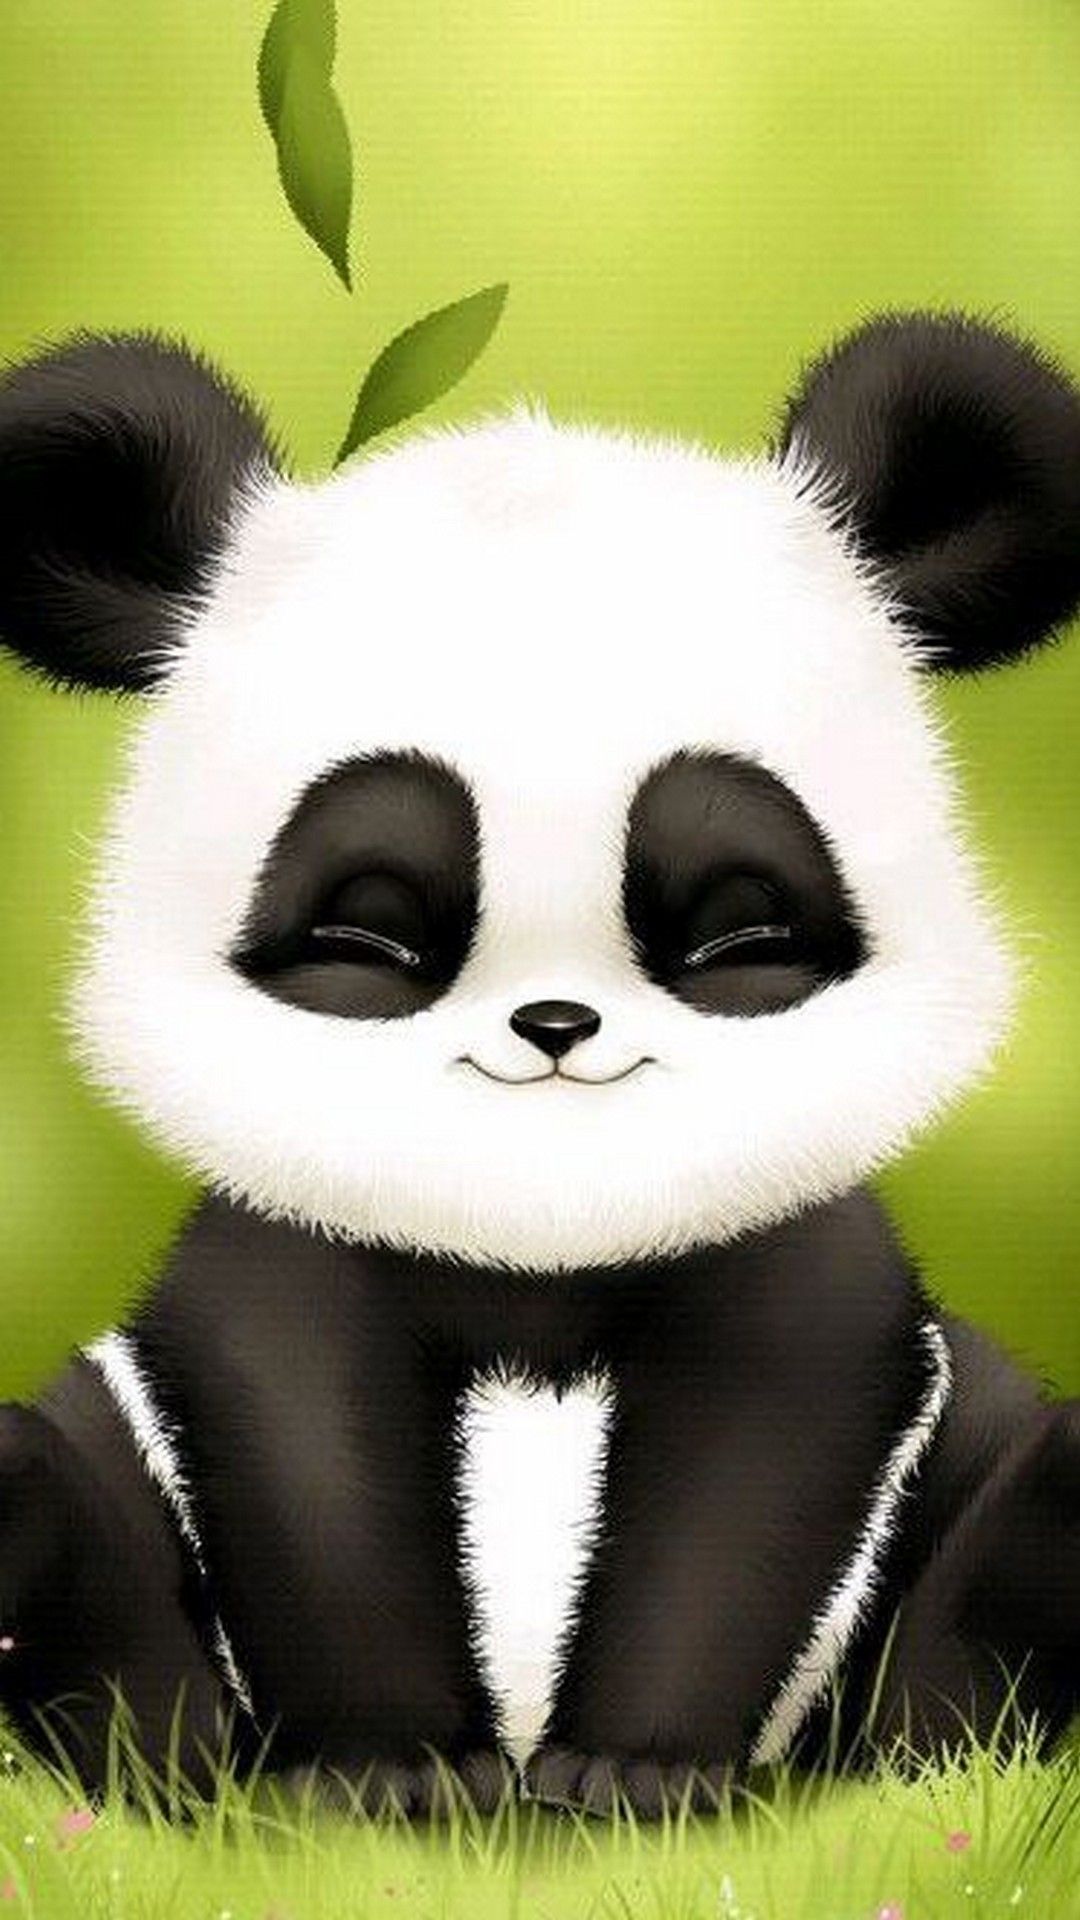 Buy PNGTUBER Cute Panda Girl / Ready to Use PNGTUBER / Premade PNGTUBER /  Anime Avatar for Twitch / Discord / Youtube / Tiktok / Sweet Model Online  in India - Etsy